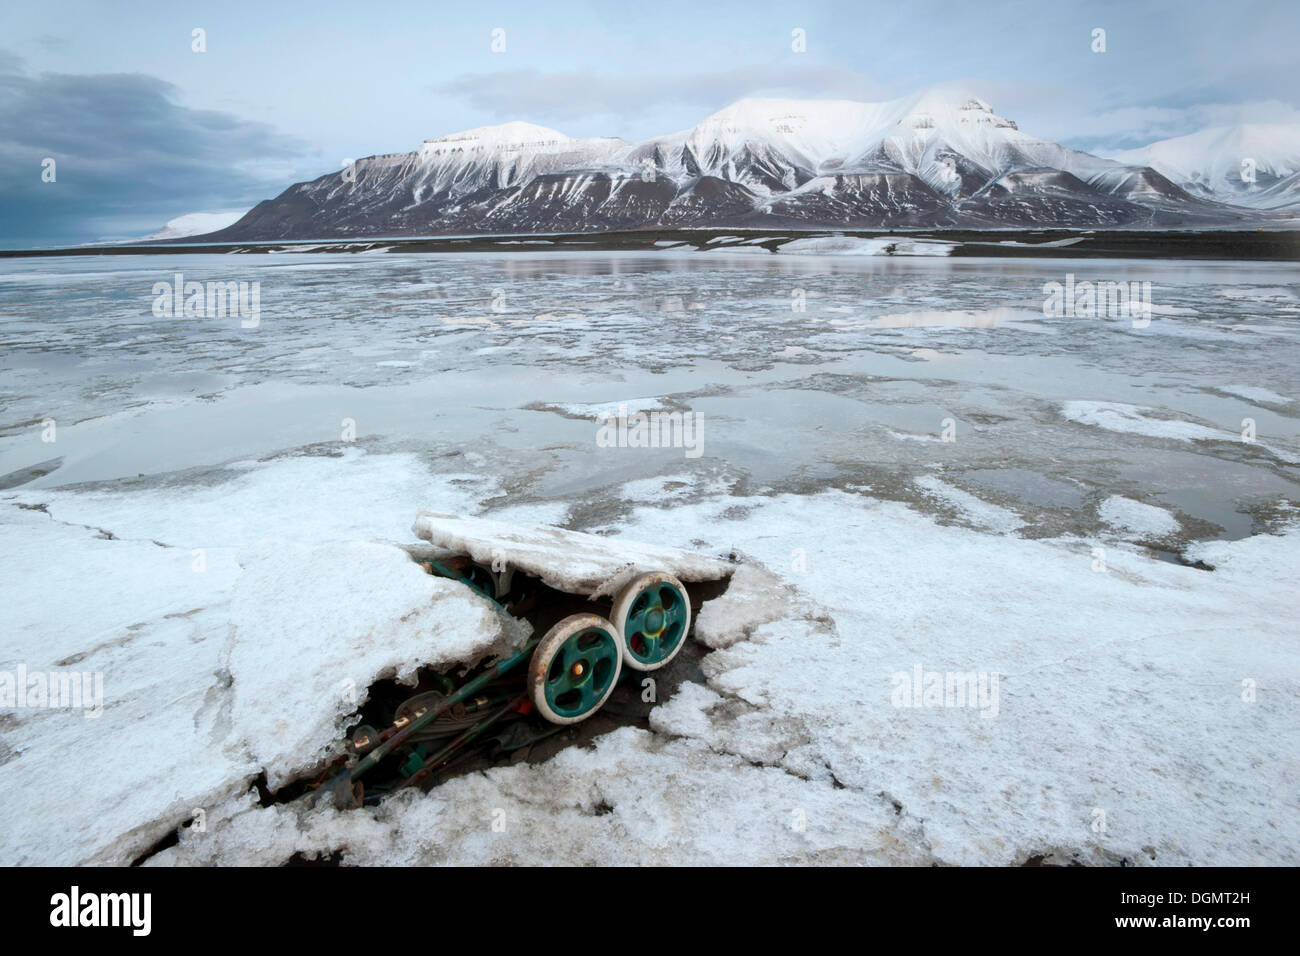 A discarded pram, waste on the coast of the Adventfjorden bay, Longyearbyen, Spitsbergen, Svalbard, Norway, Europe Stock Photo